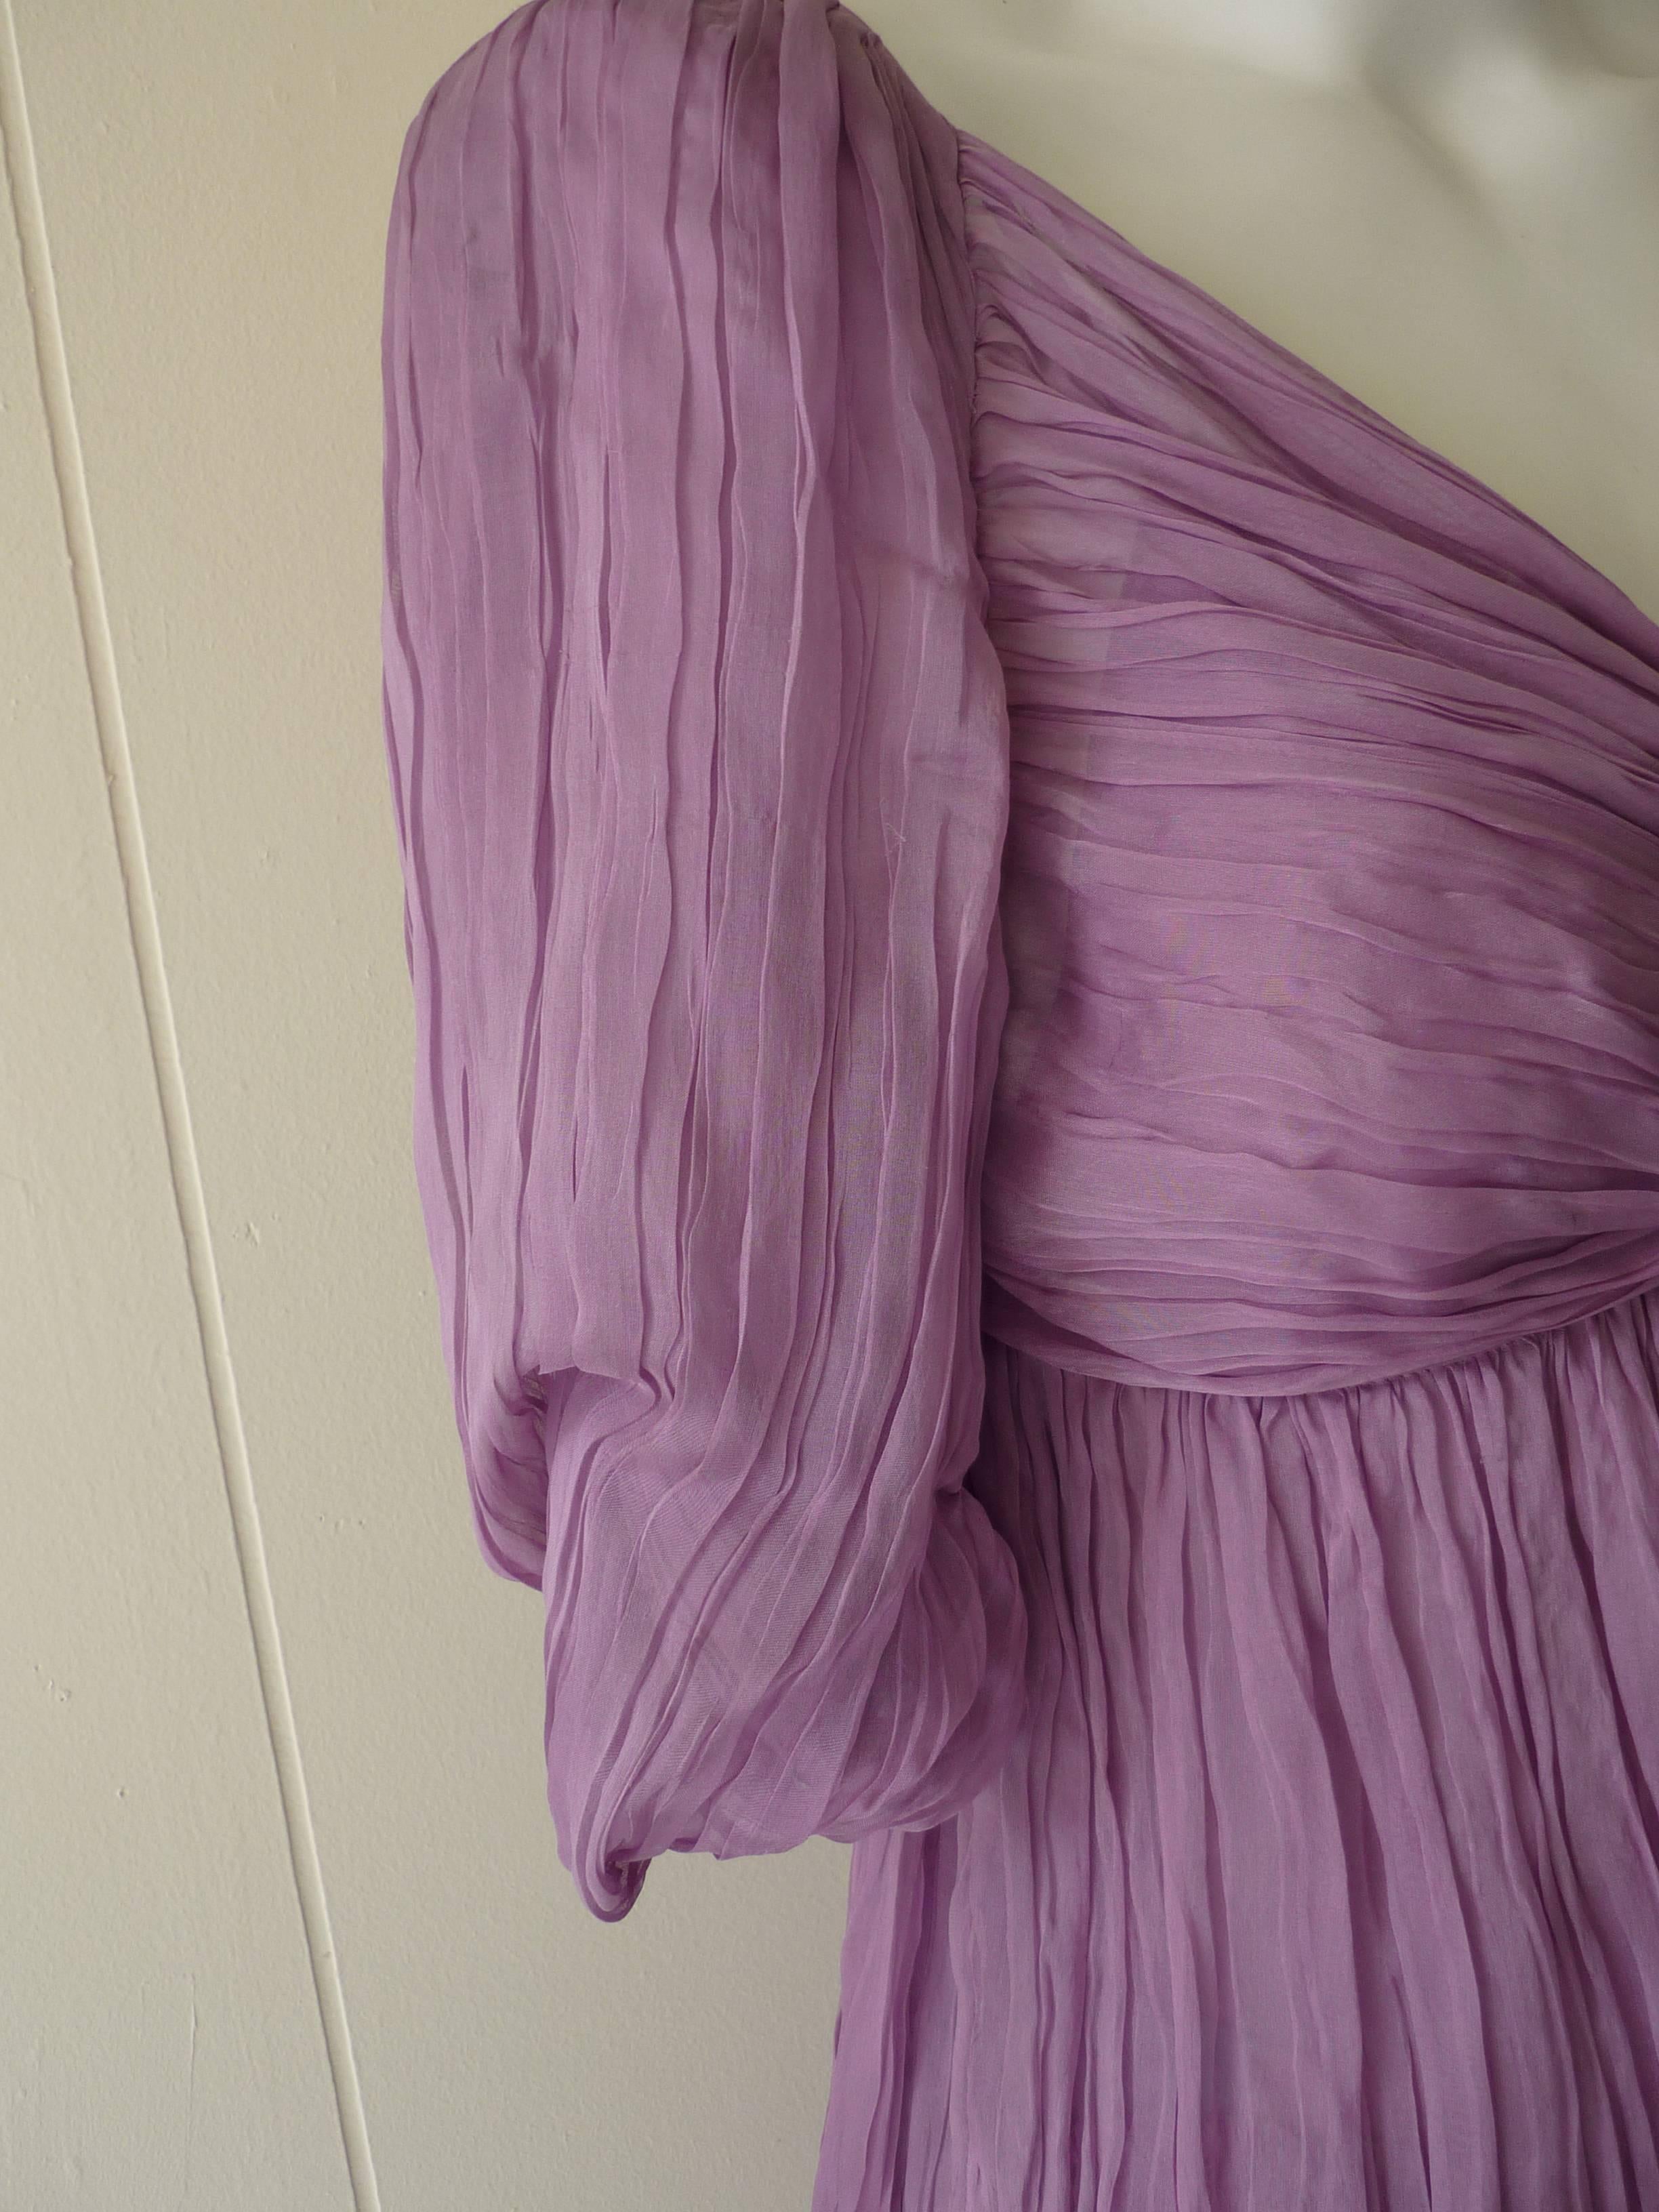 Women's Alberta Ferretti Purple Layered Silk Top (42 ITL)